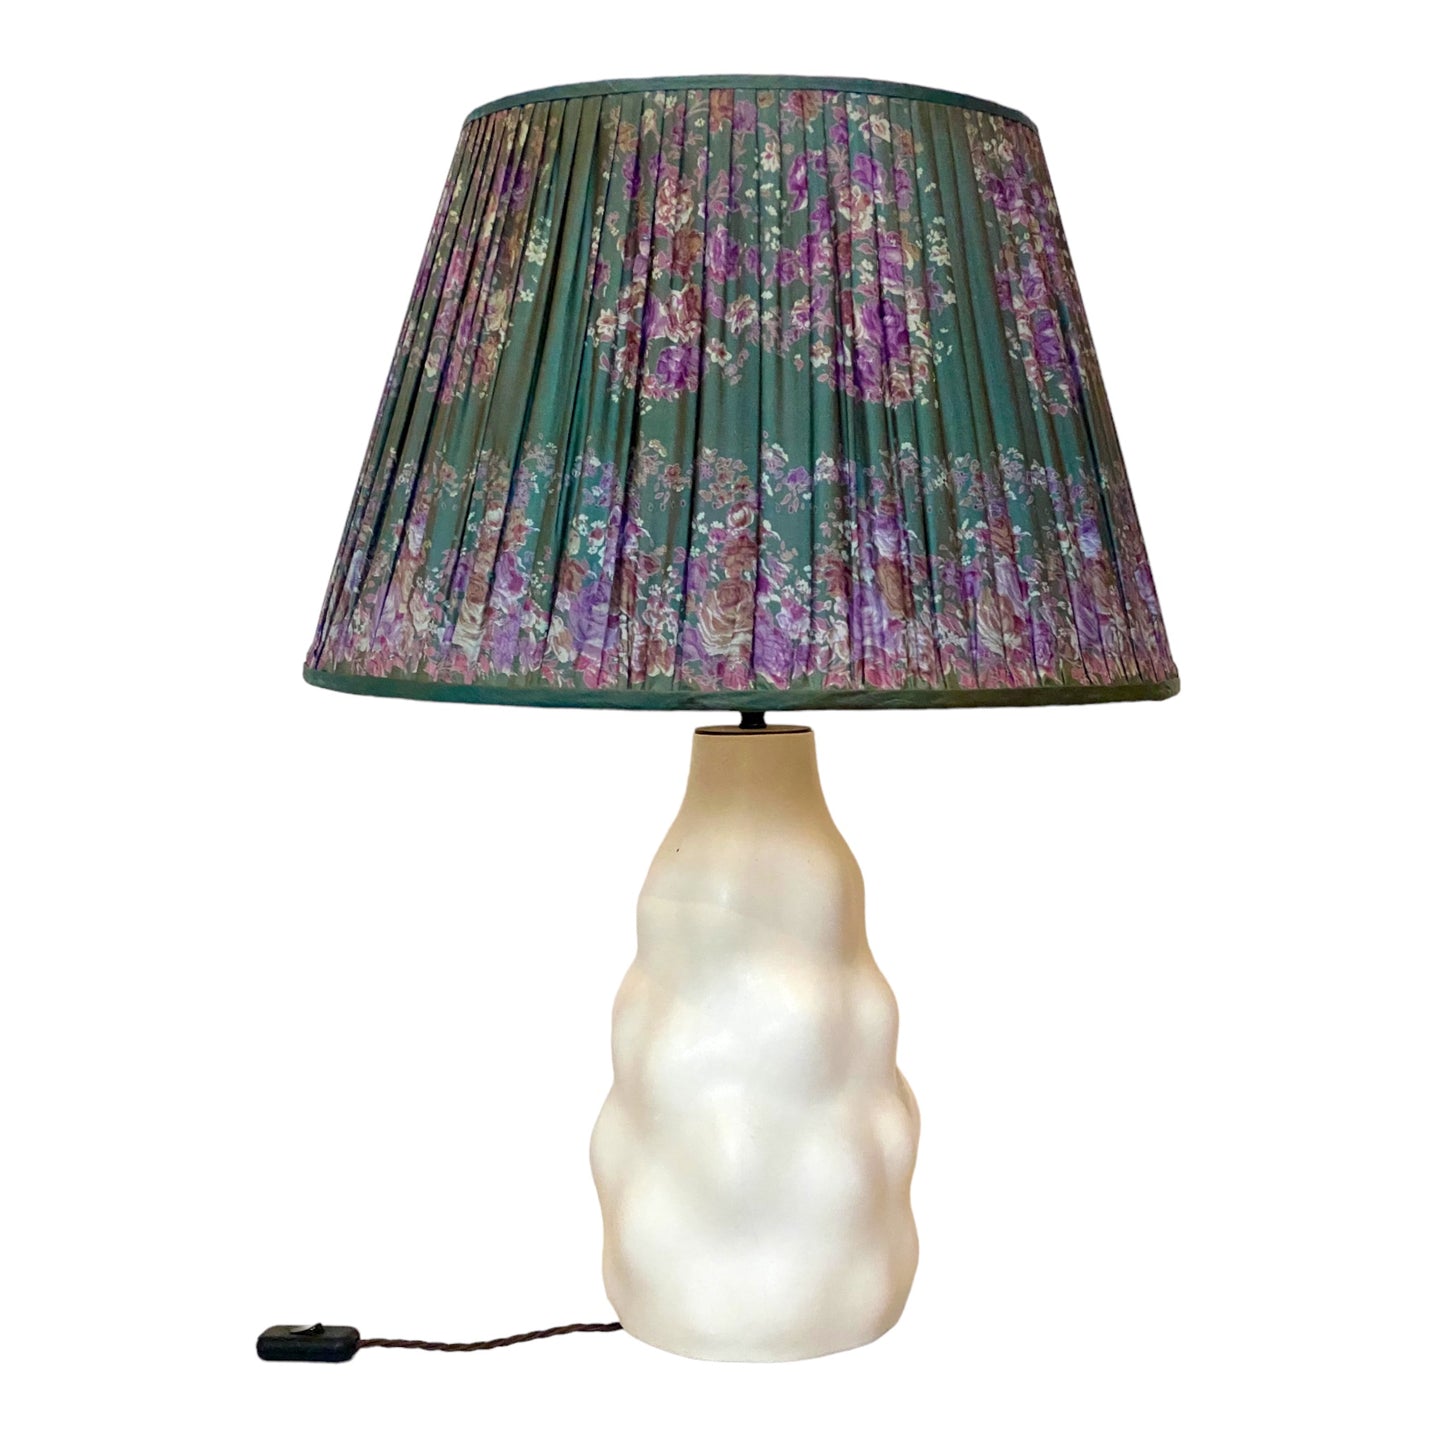 Shot peacock silk sari lampshade on Iki lamp